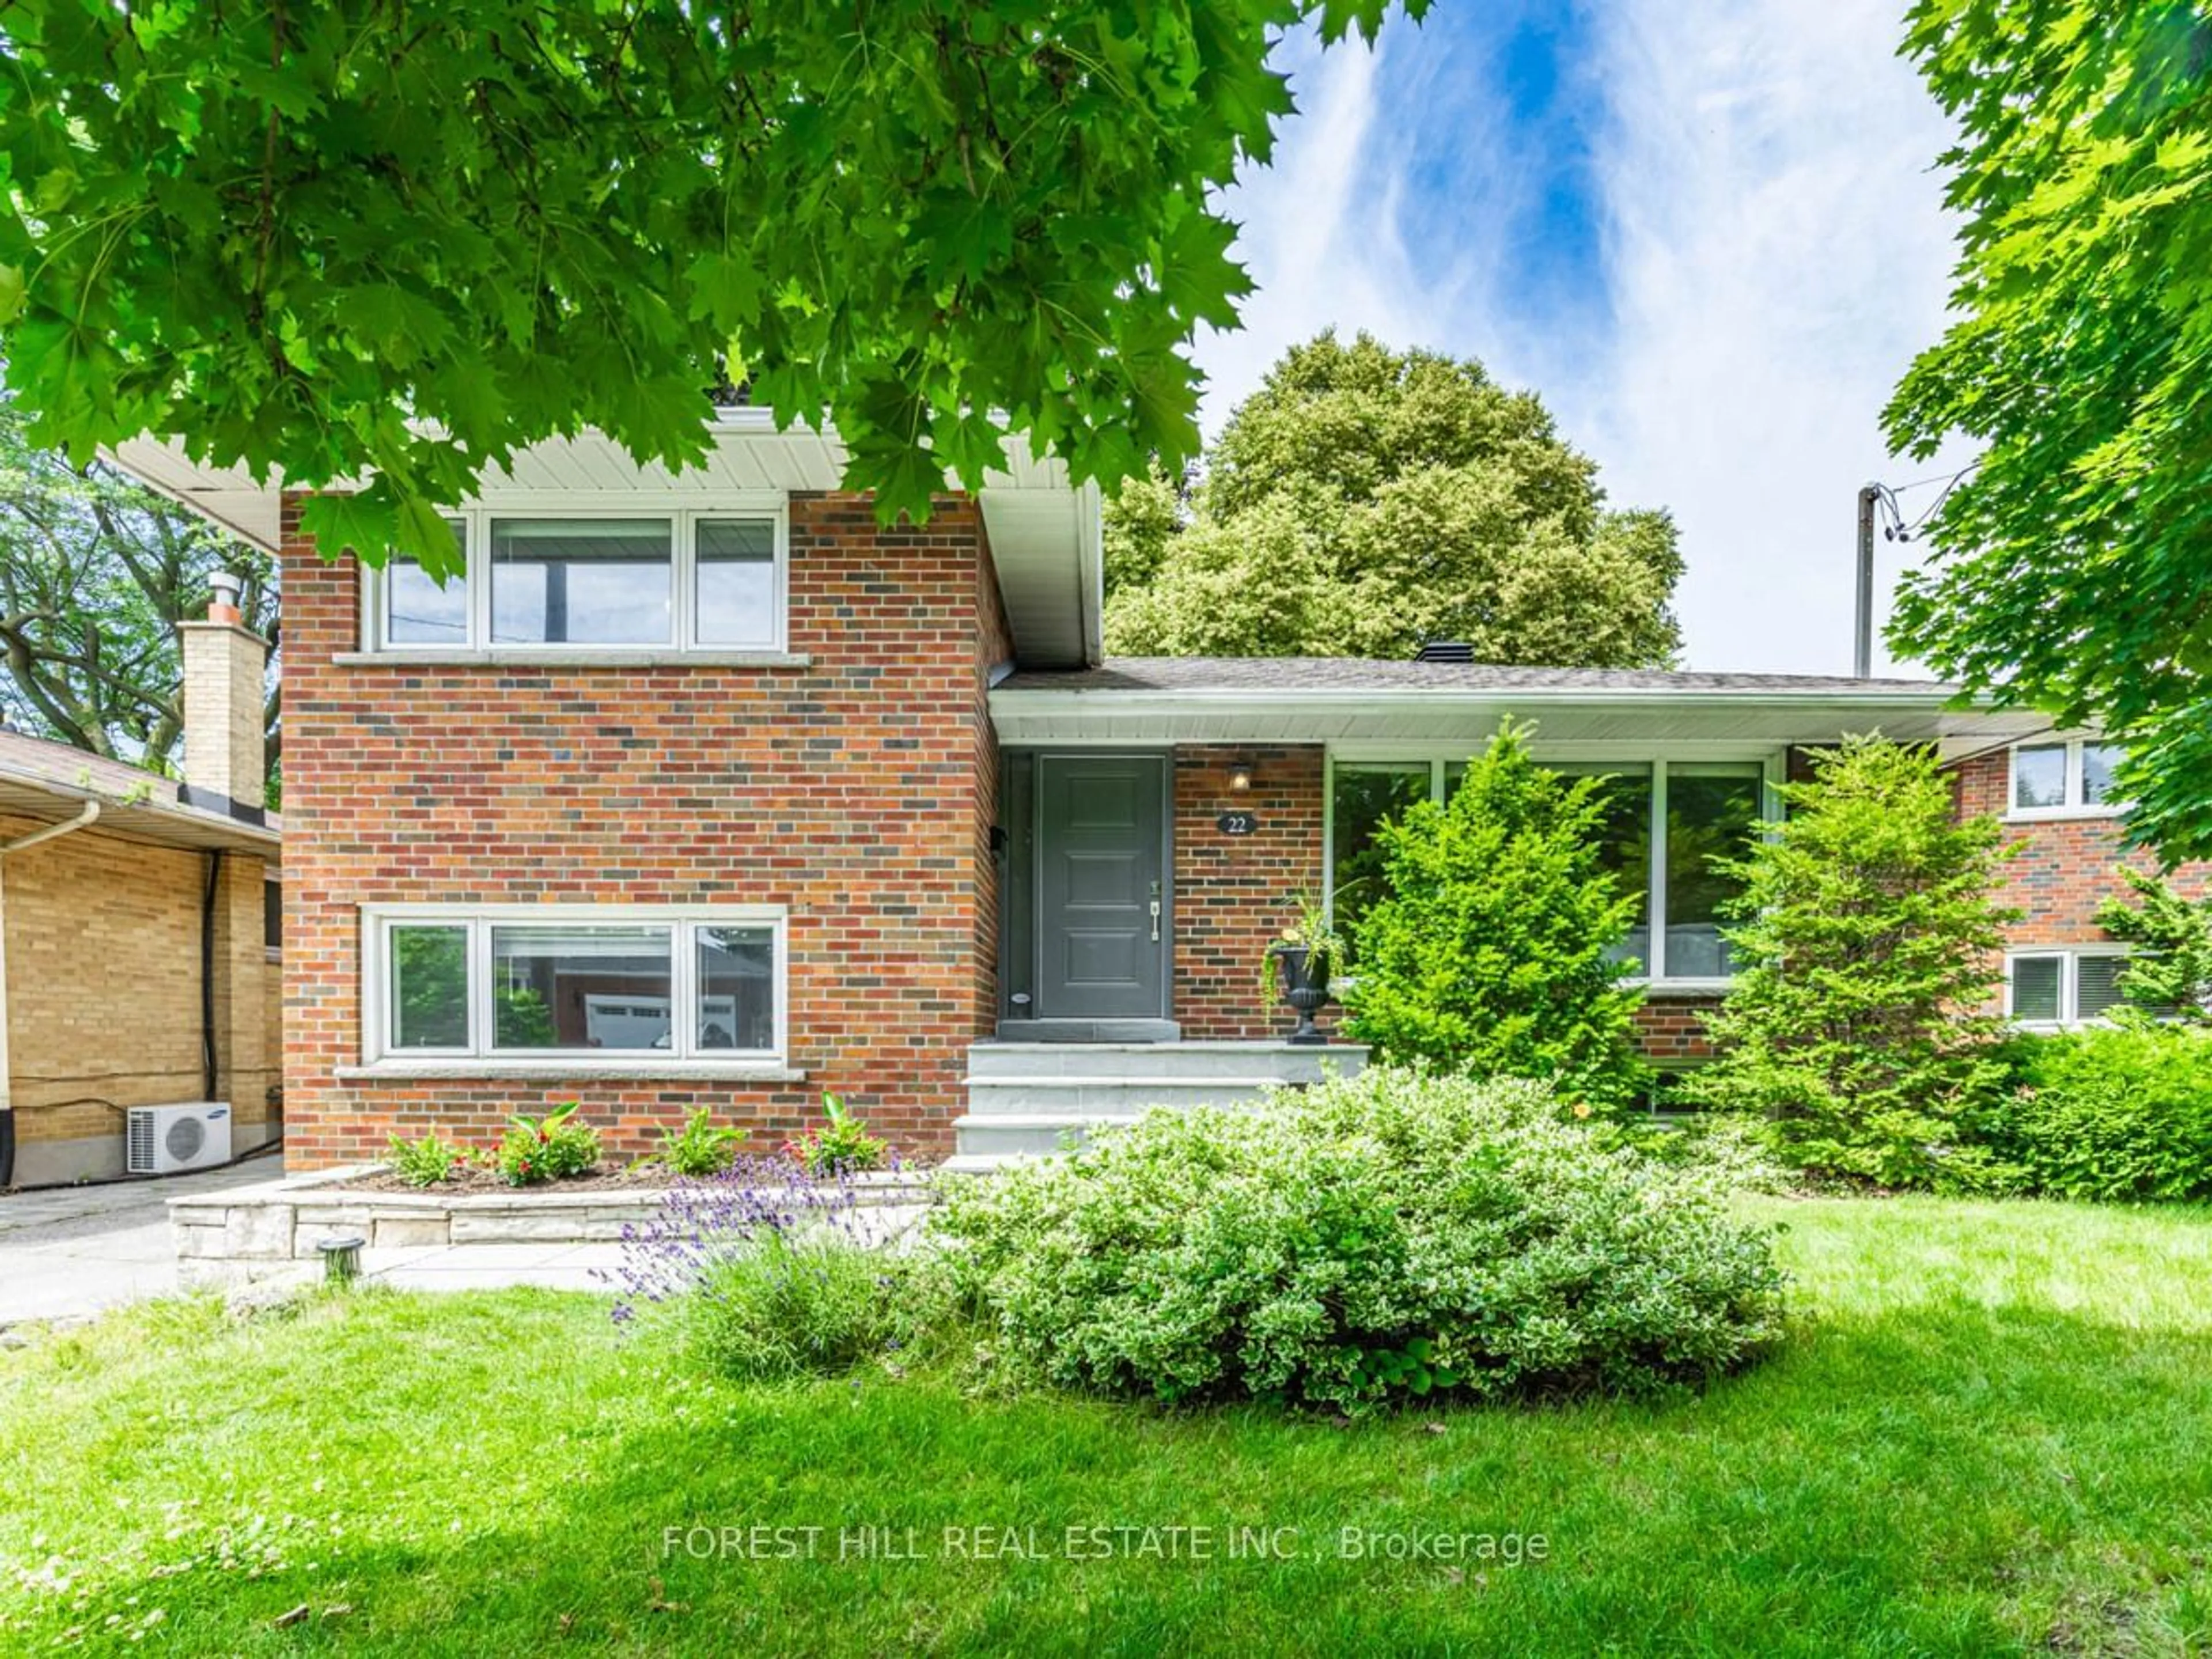 Home with brick exterior material for 22 Shrewsbury Sq, Toronto Ontario M1T 1L2